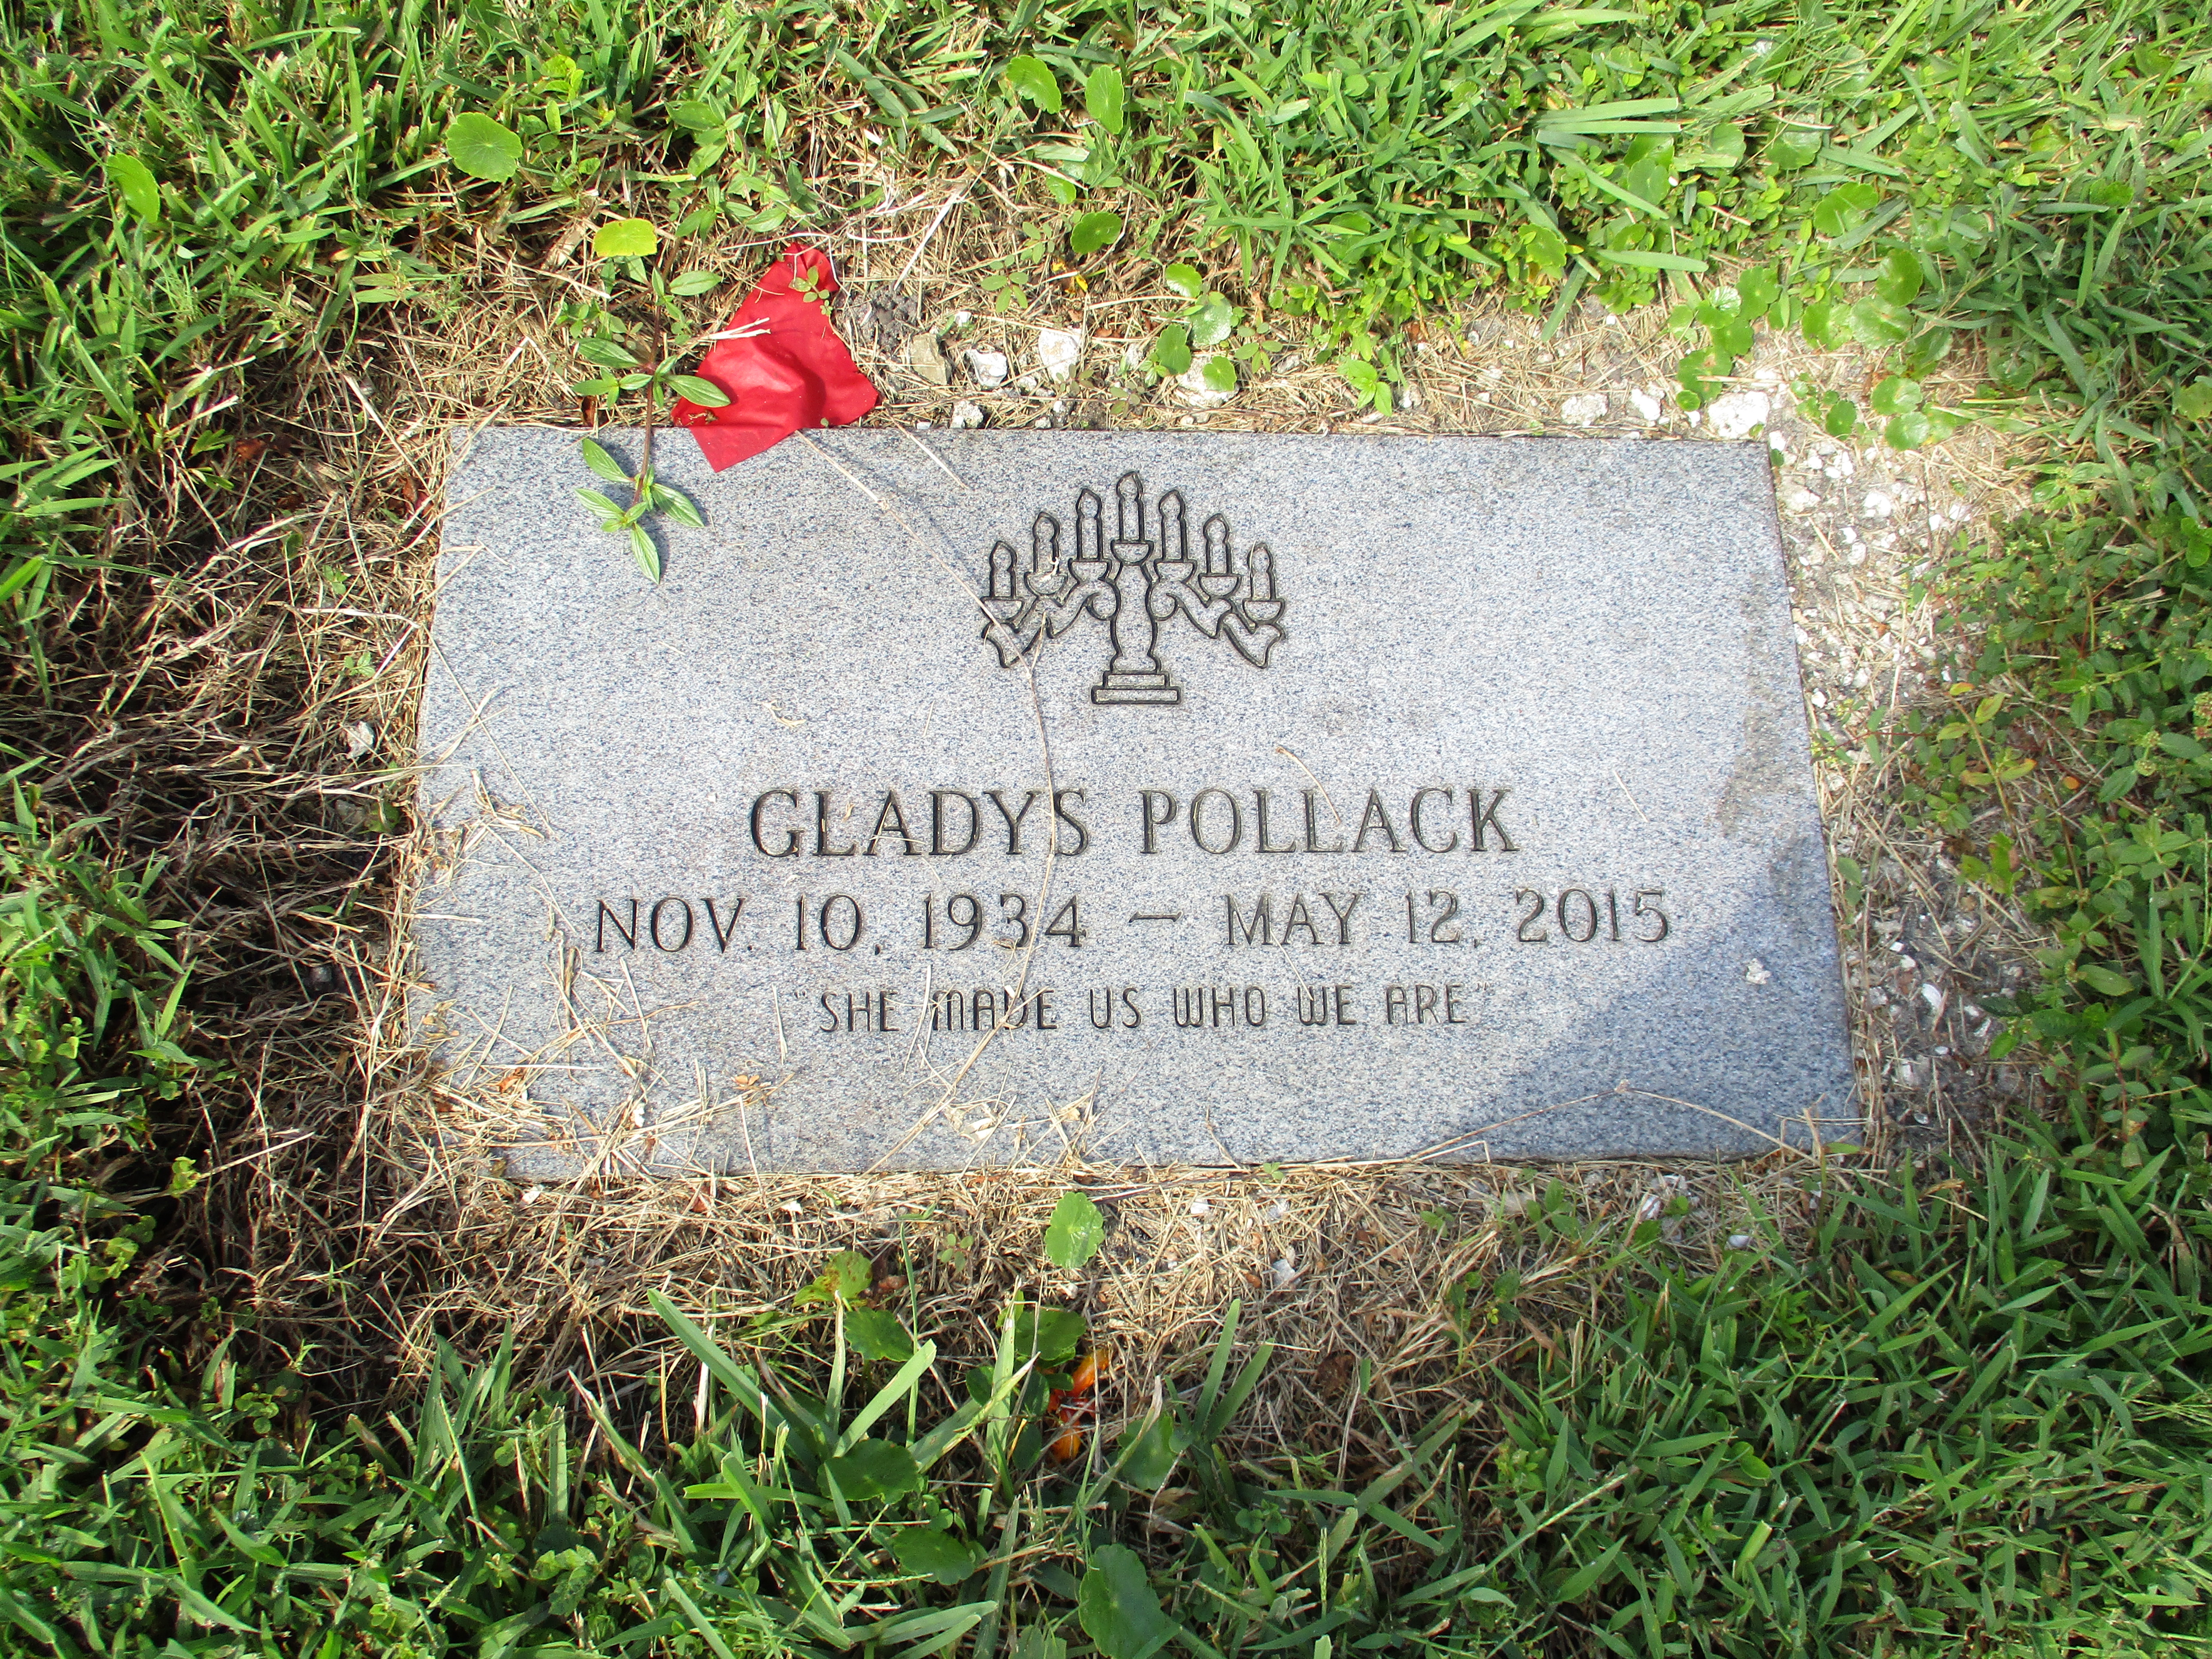 Gladys Pollack